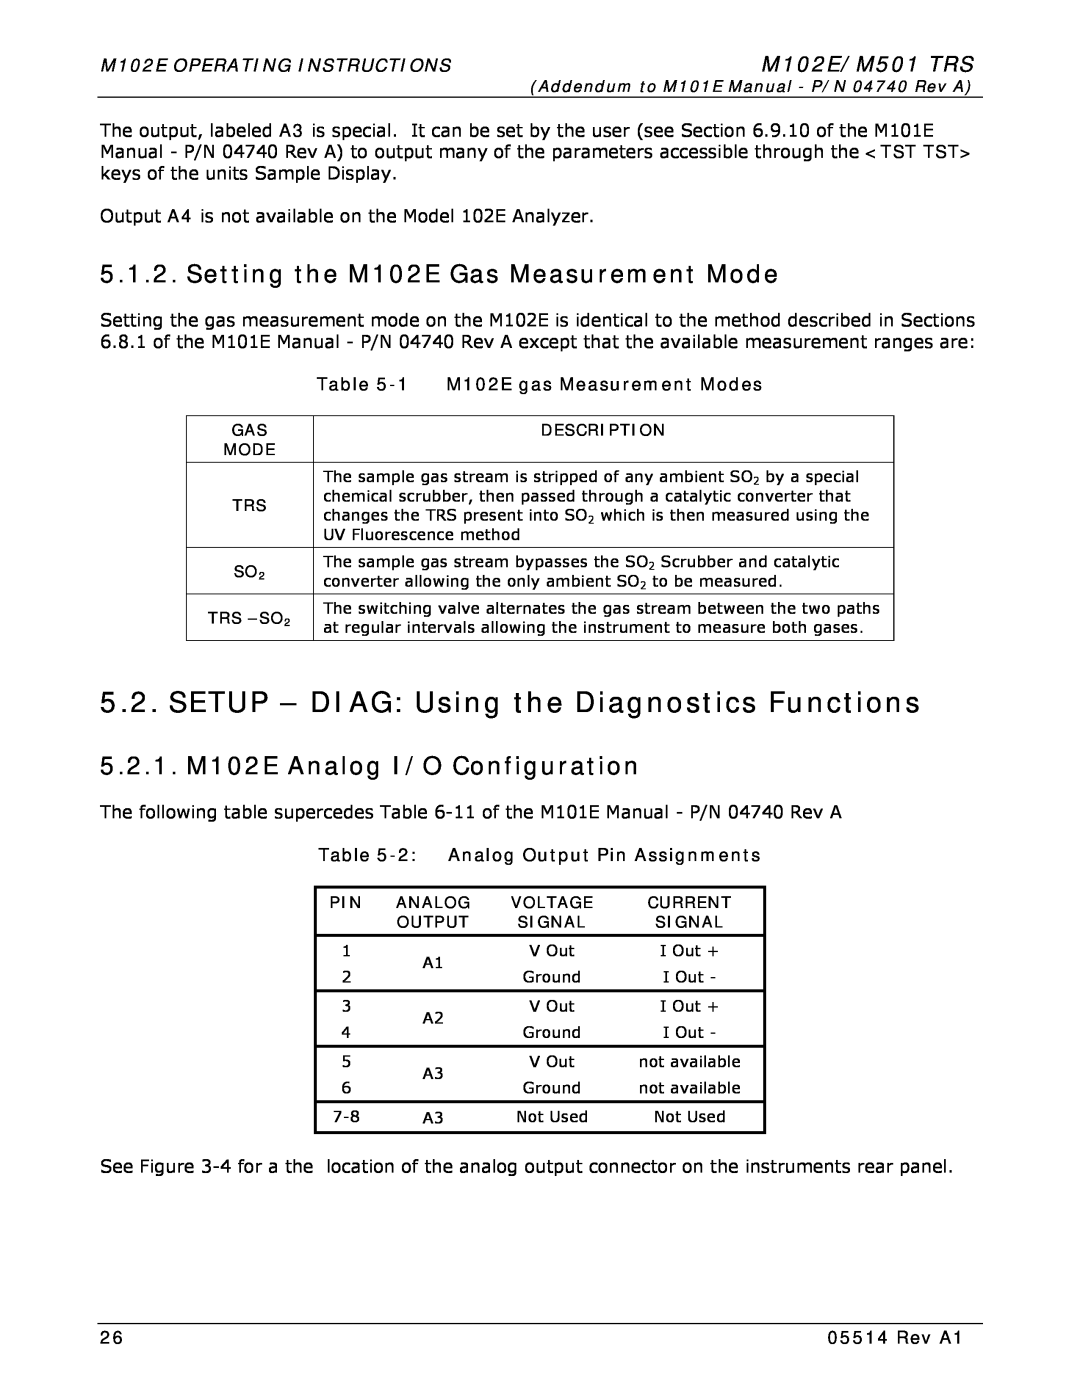 Teledyne SETUP - DIAG Using the Diagnostics Functions, Setting the M102E Gas Measurement Mode, M102E/M501 TRS, Rev A1 